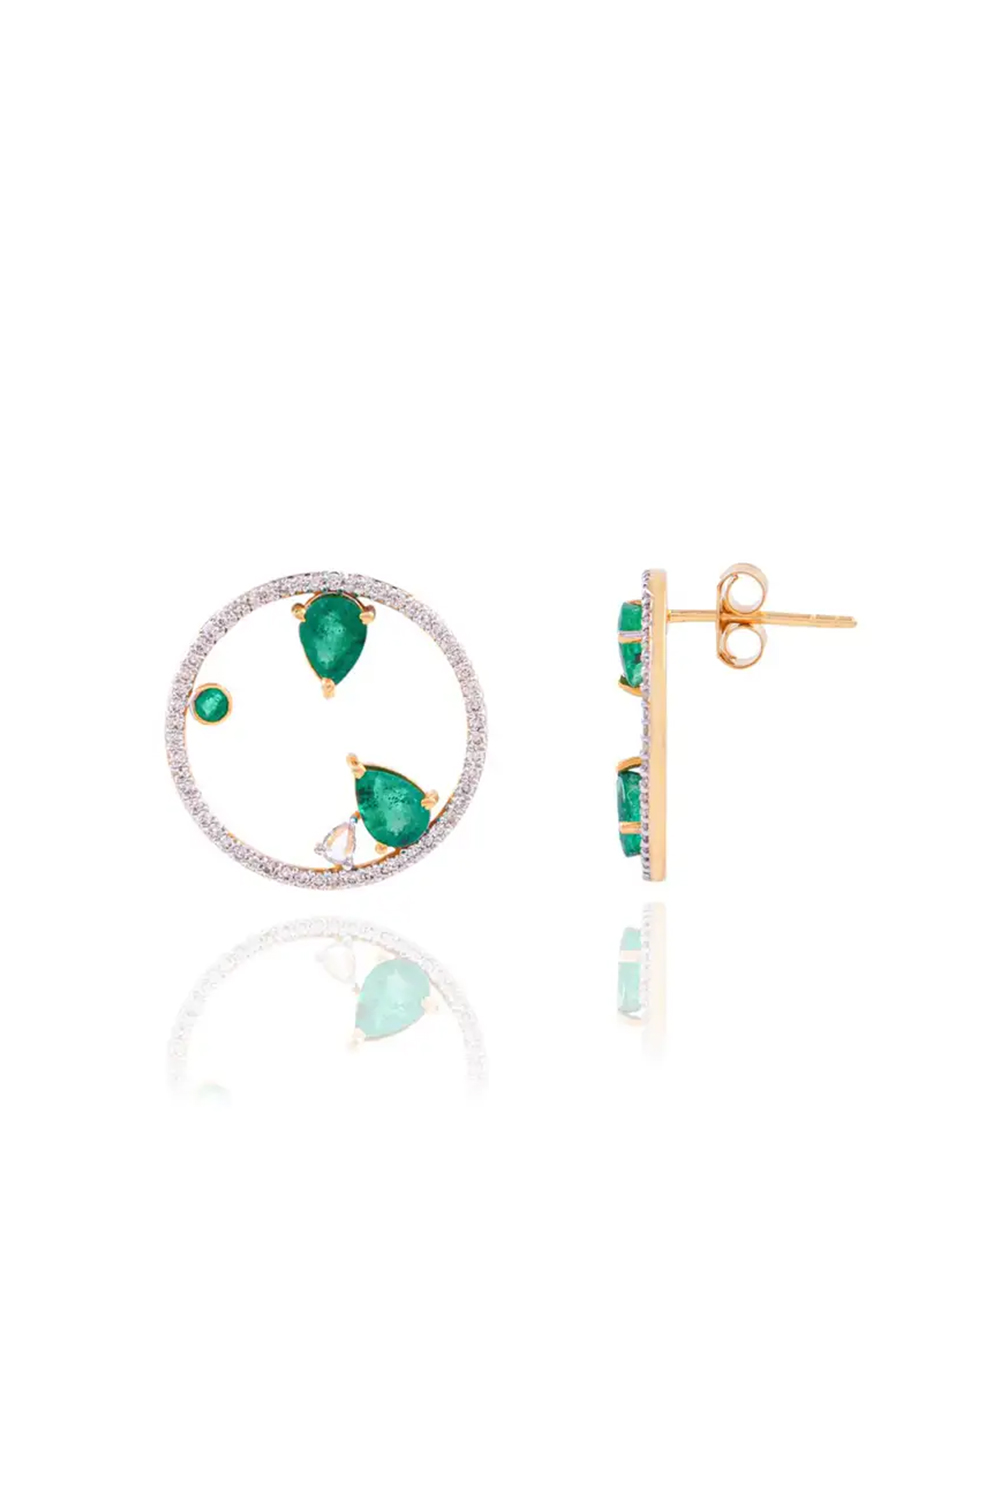 Emerald Stud Earrings with Diamond in 14K Gold